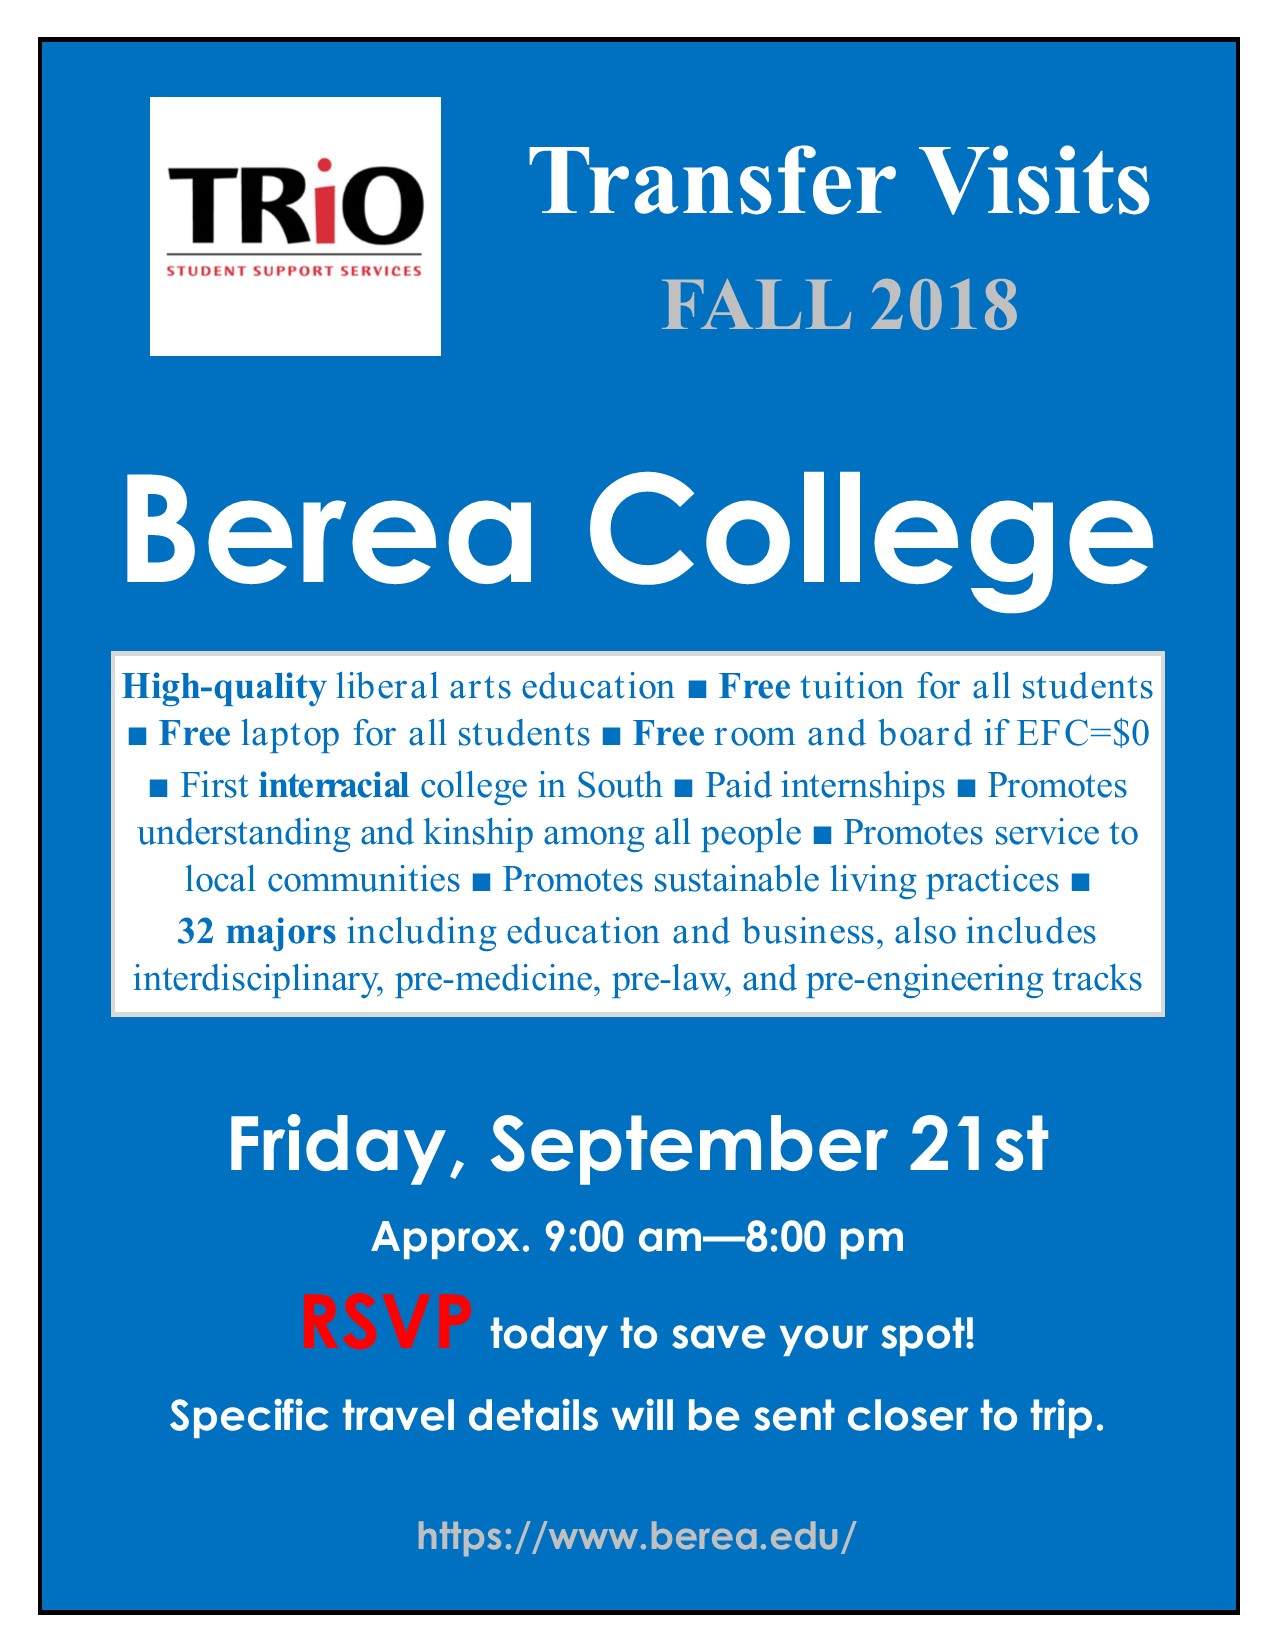 Fall 2018 Berea College Transfer Visit flyer.